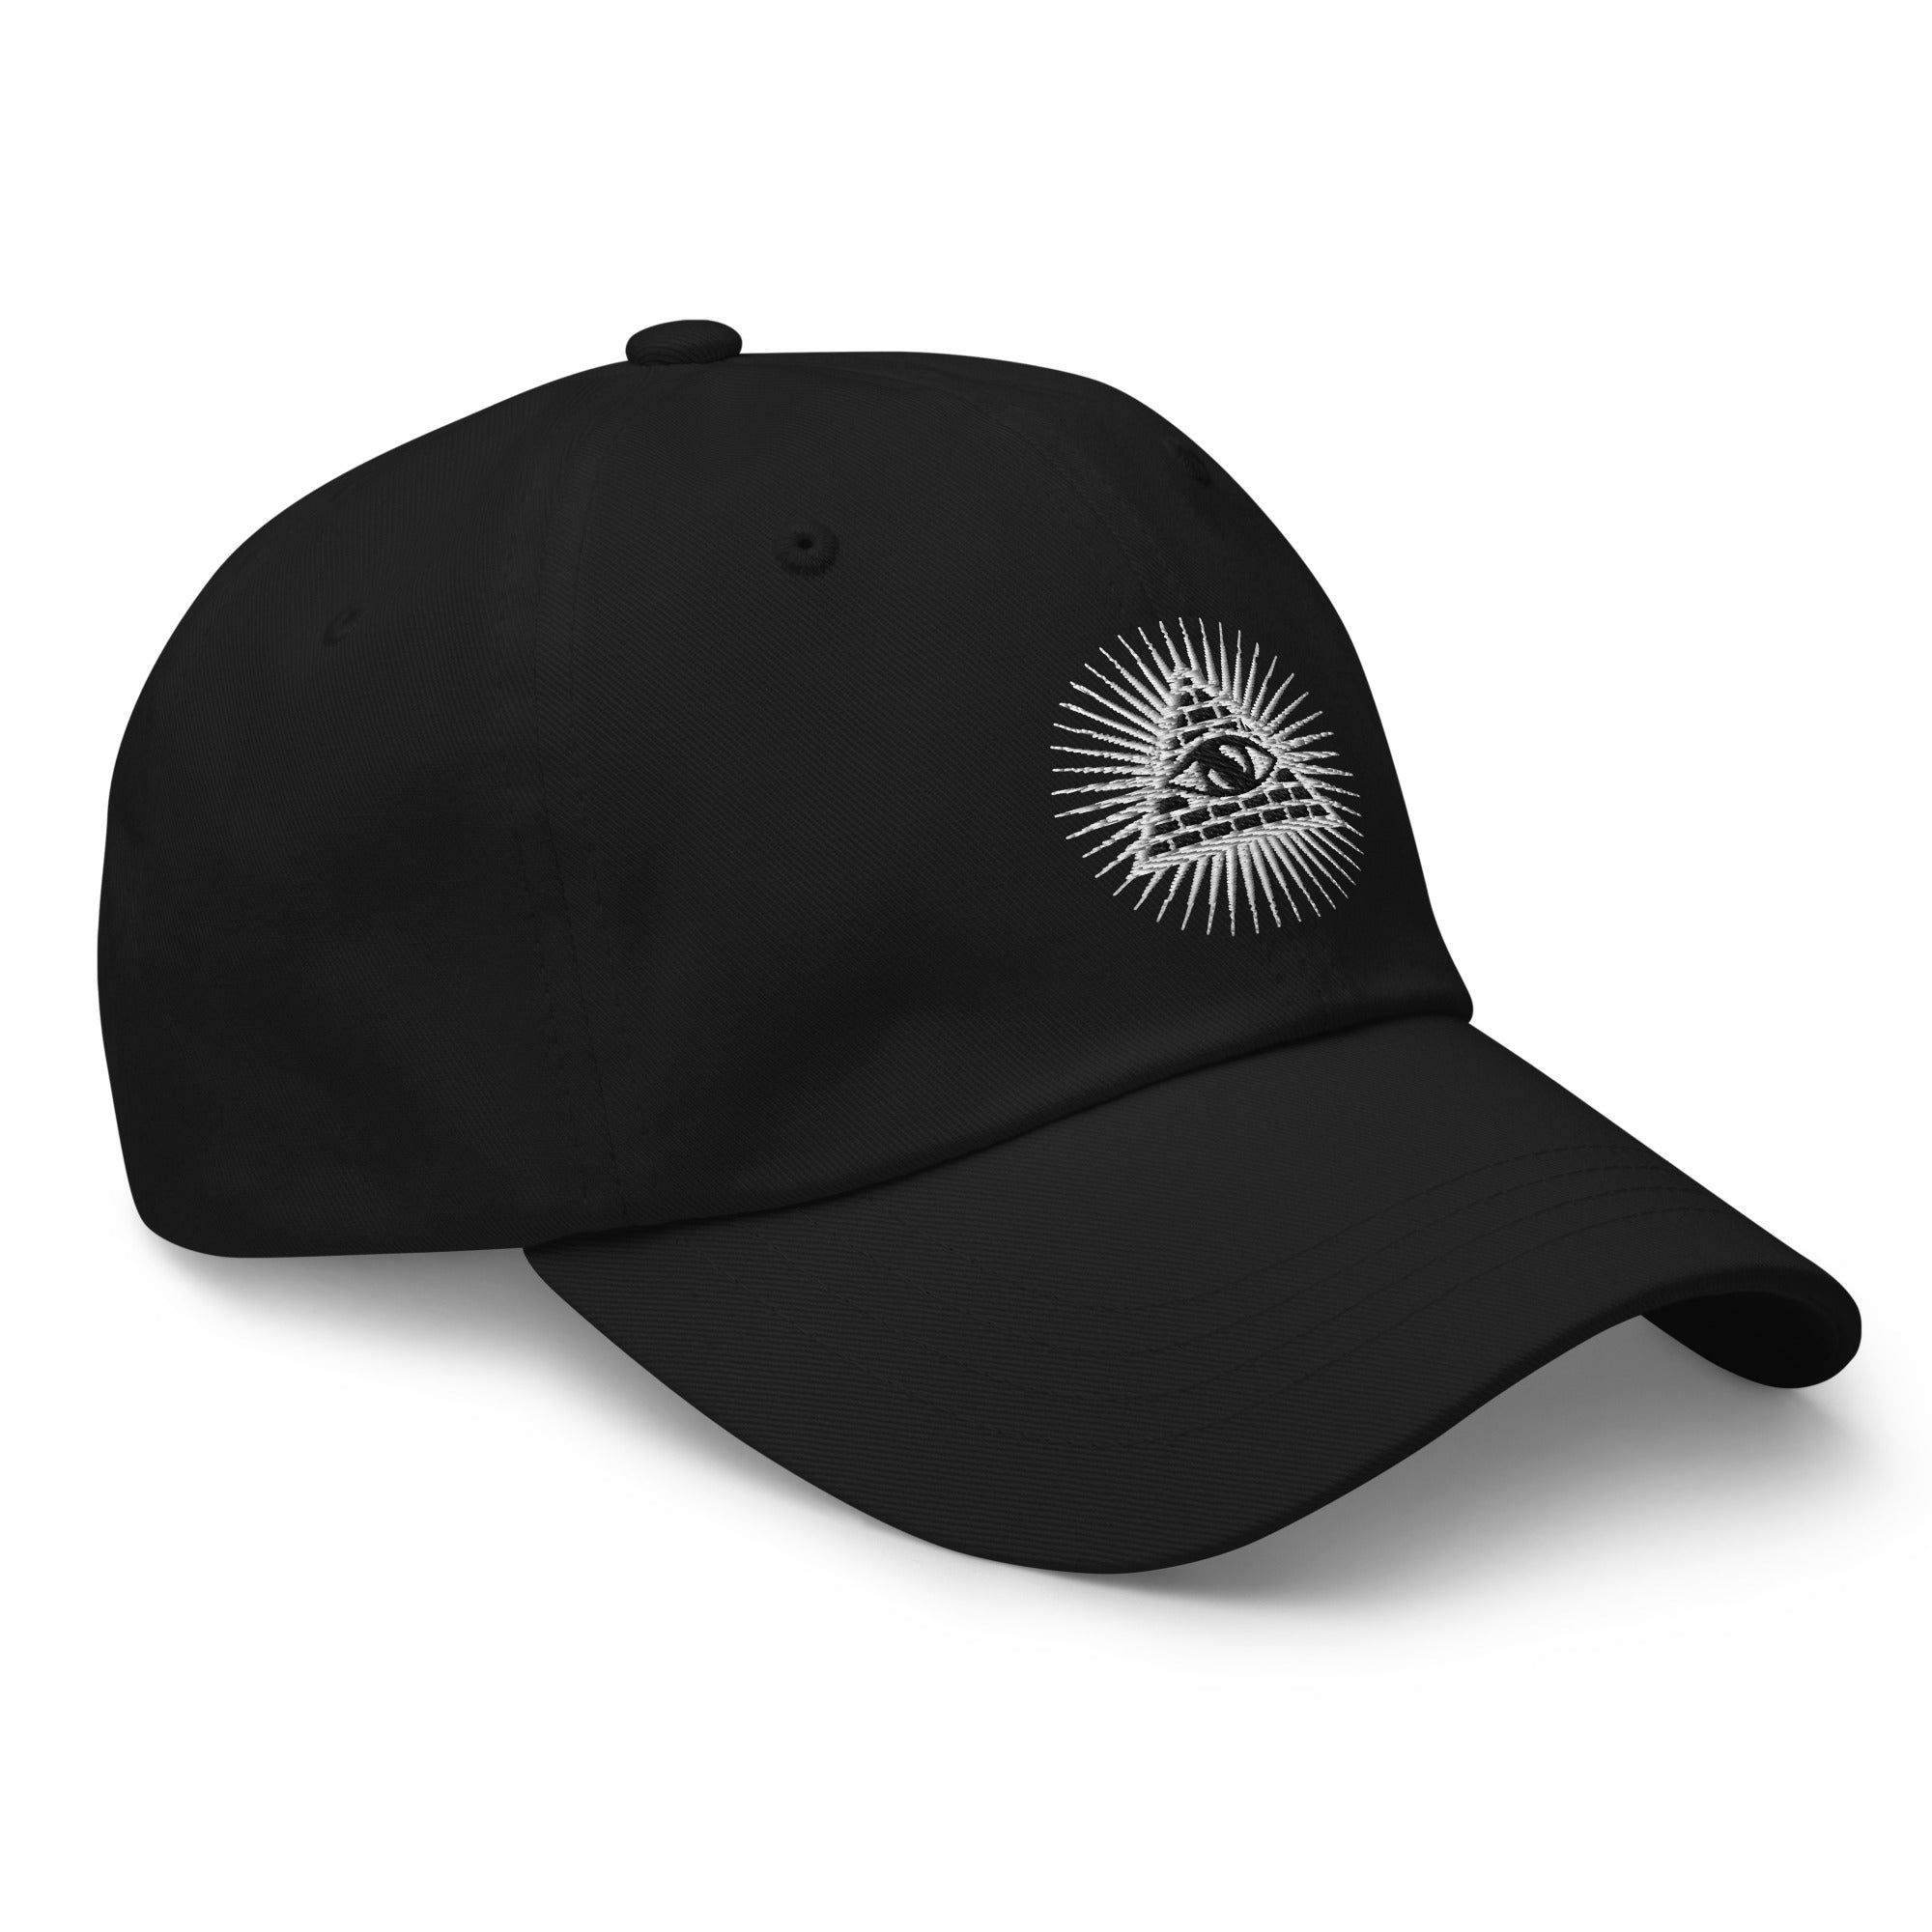 Illuminati All Seeing Psychic Eye Embroidered Baseball Cap Dad hat - Edge of Life Designs